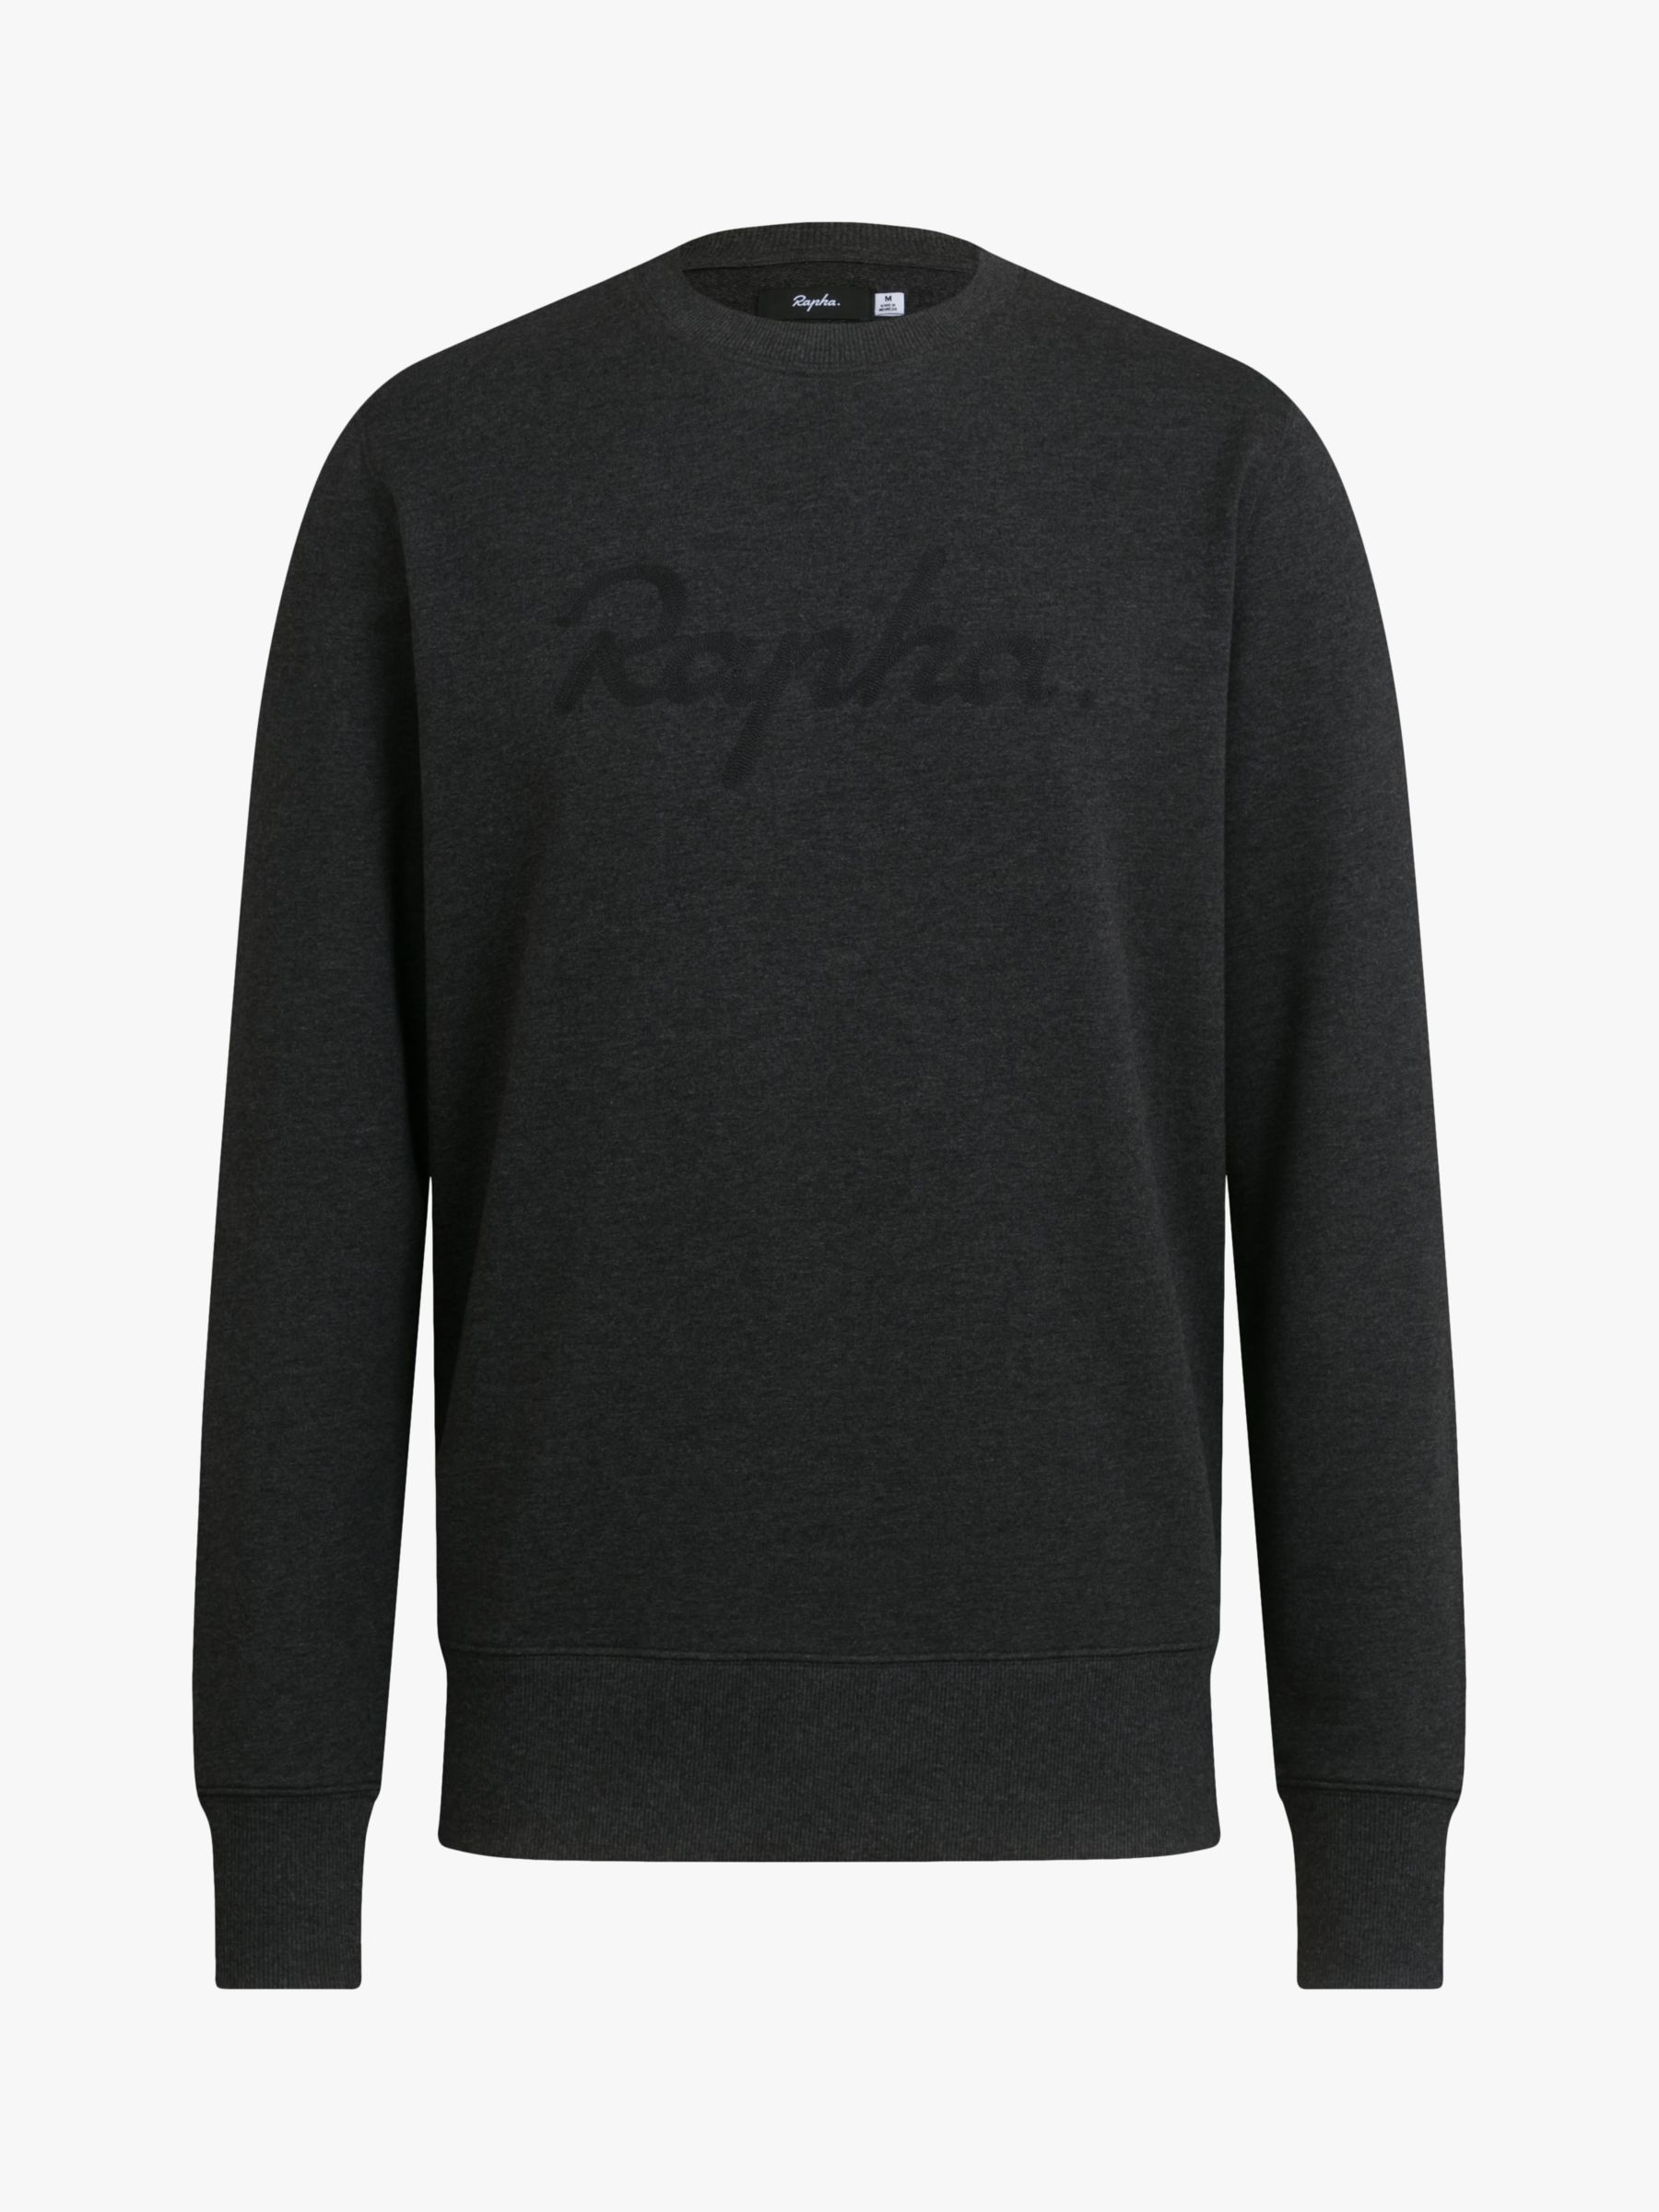 Rapha Chain Stitched Logo Sweatshirt